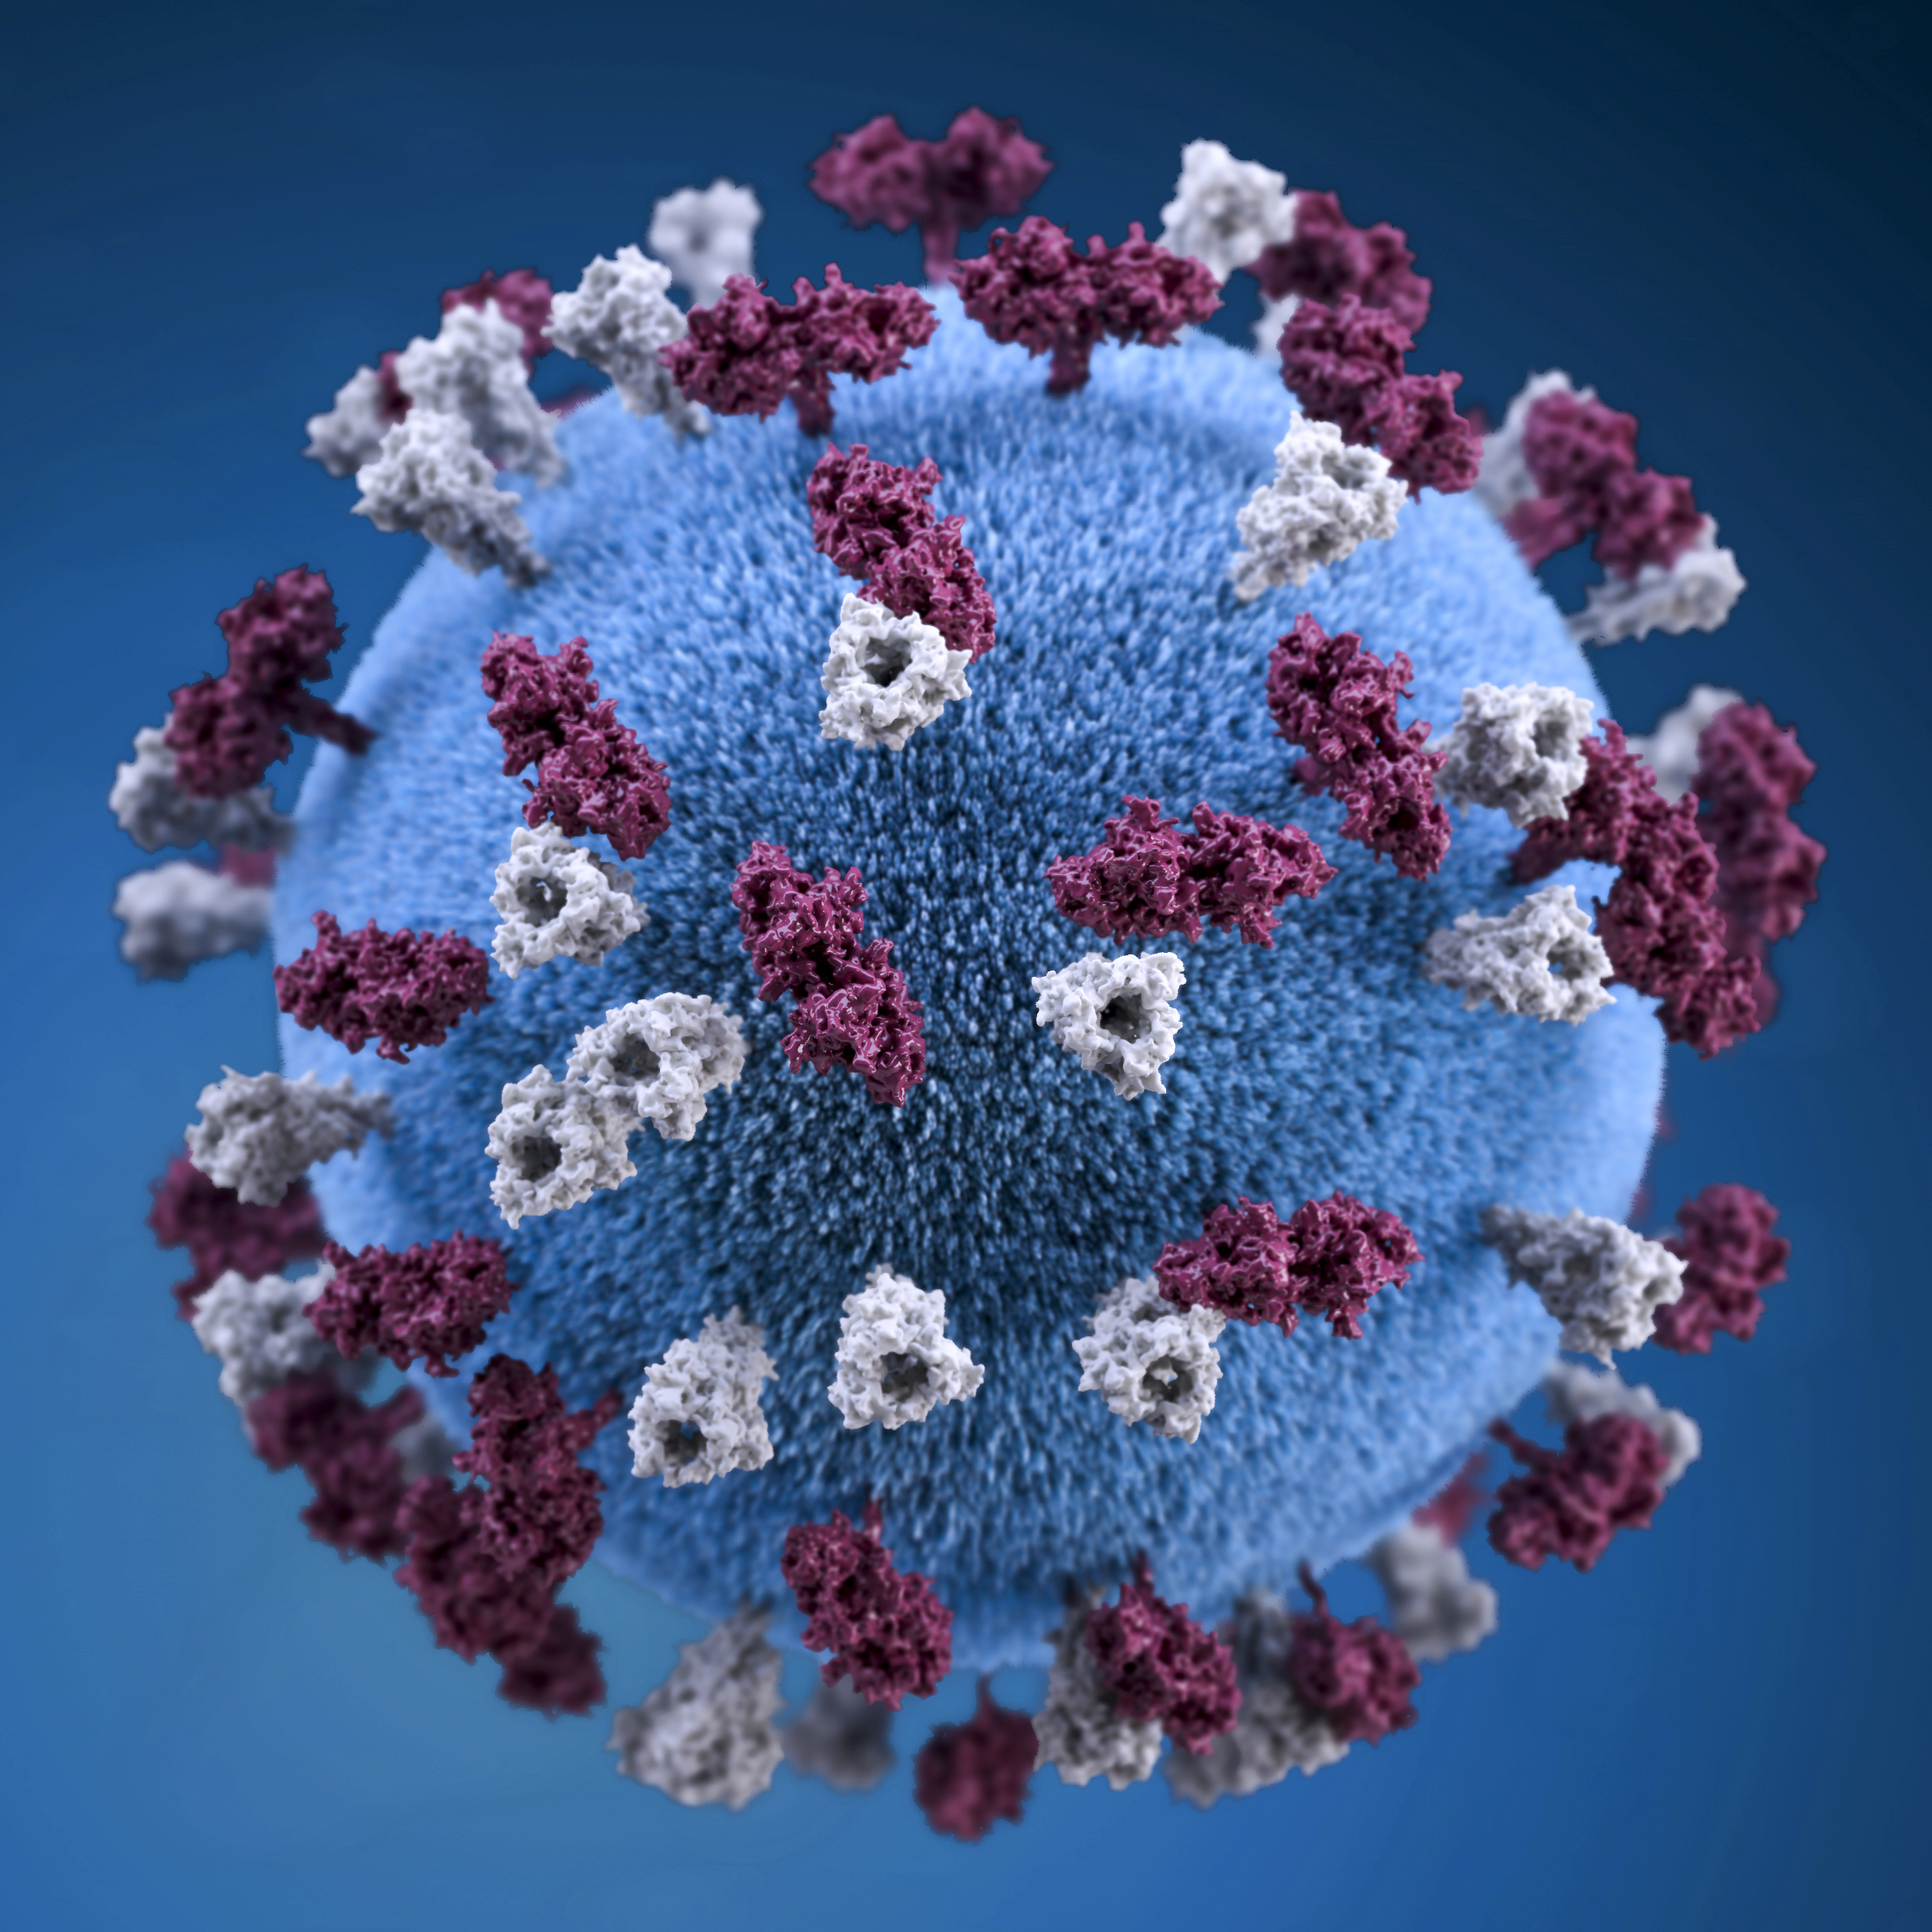 covid-19-coronavirus-covid-cell-pandemic-corona-virus-1608799-pxhere.com